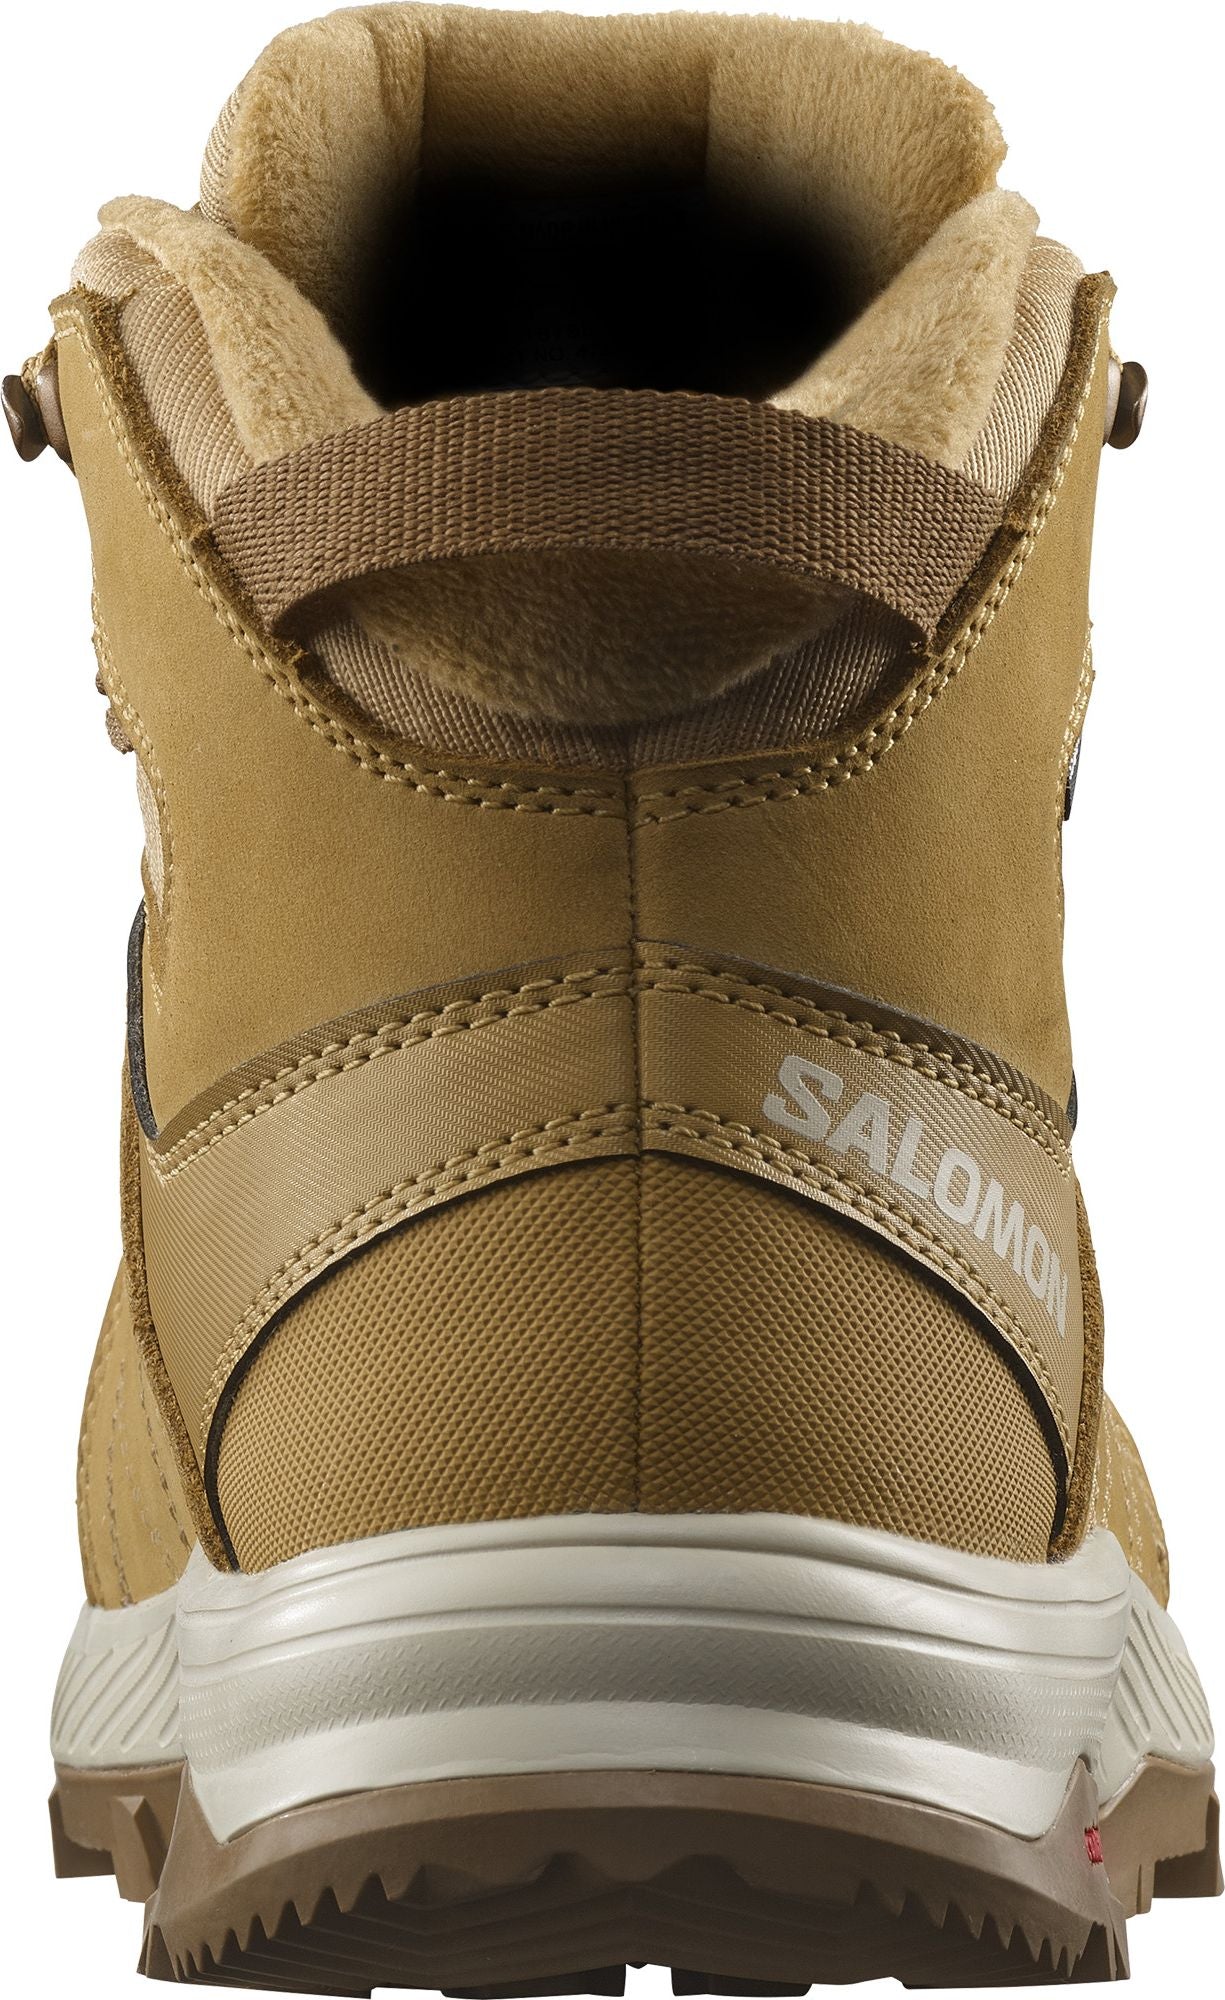 Salomon Boots Outchill Ts Cswp Taffy